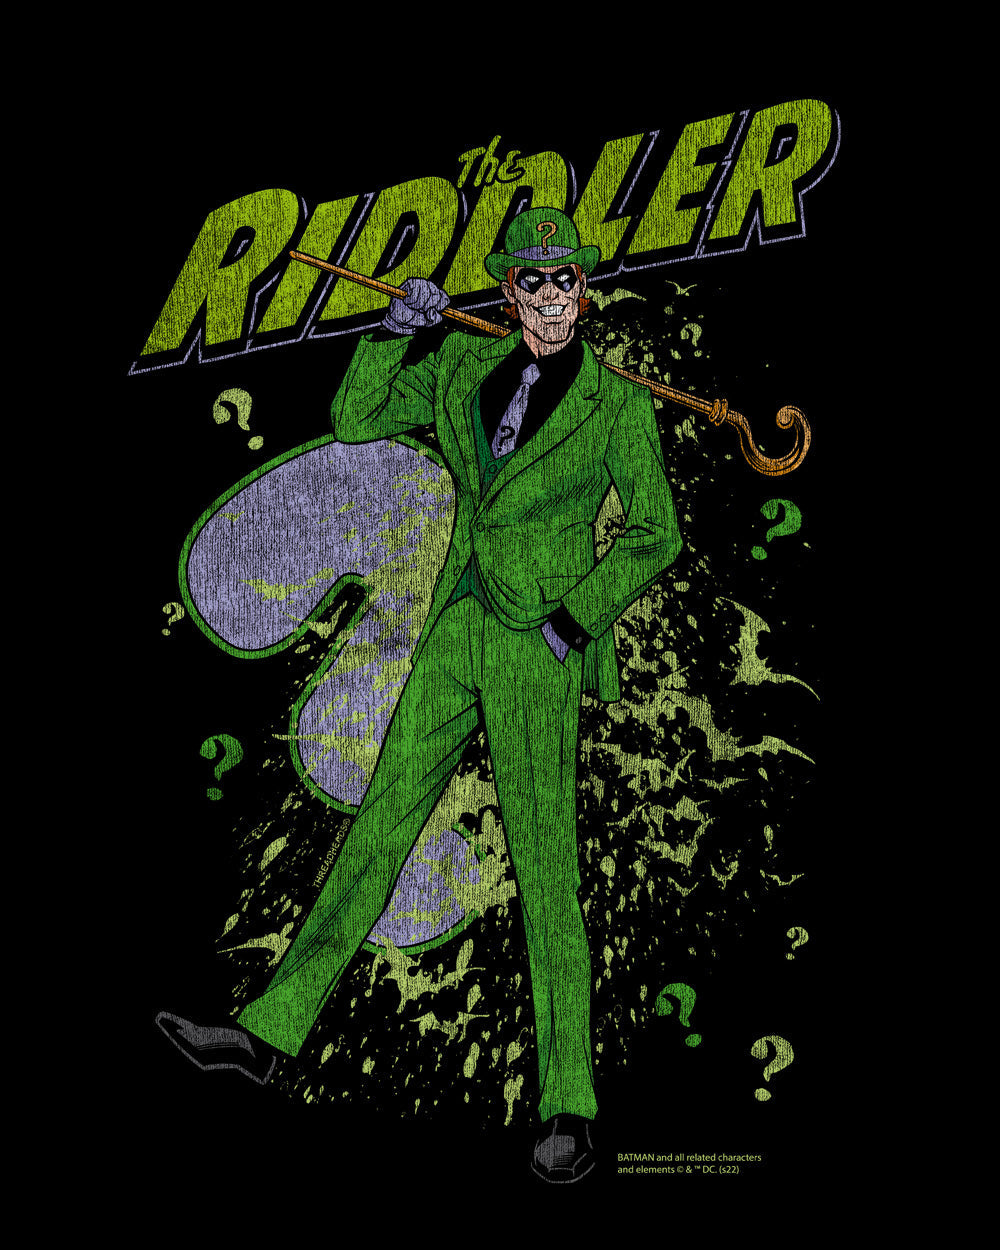 DC Comics The Riddler Batman Superhero Comic Book Villain Geek Nerd Retro Vintage Officially Licensed Cotton  T-Shirt